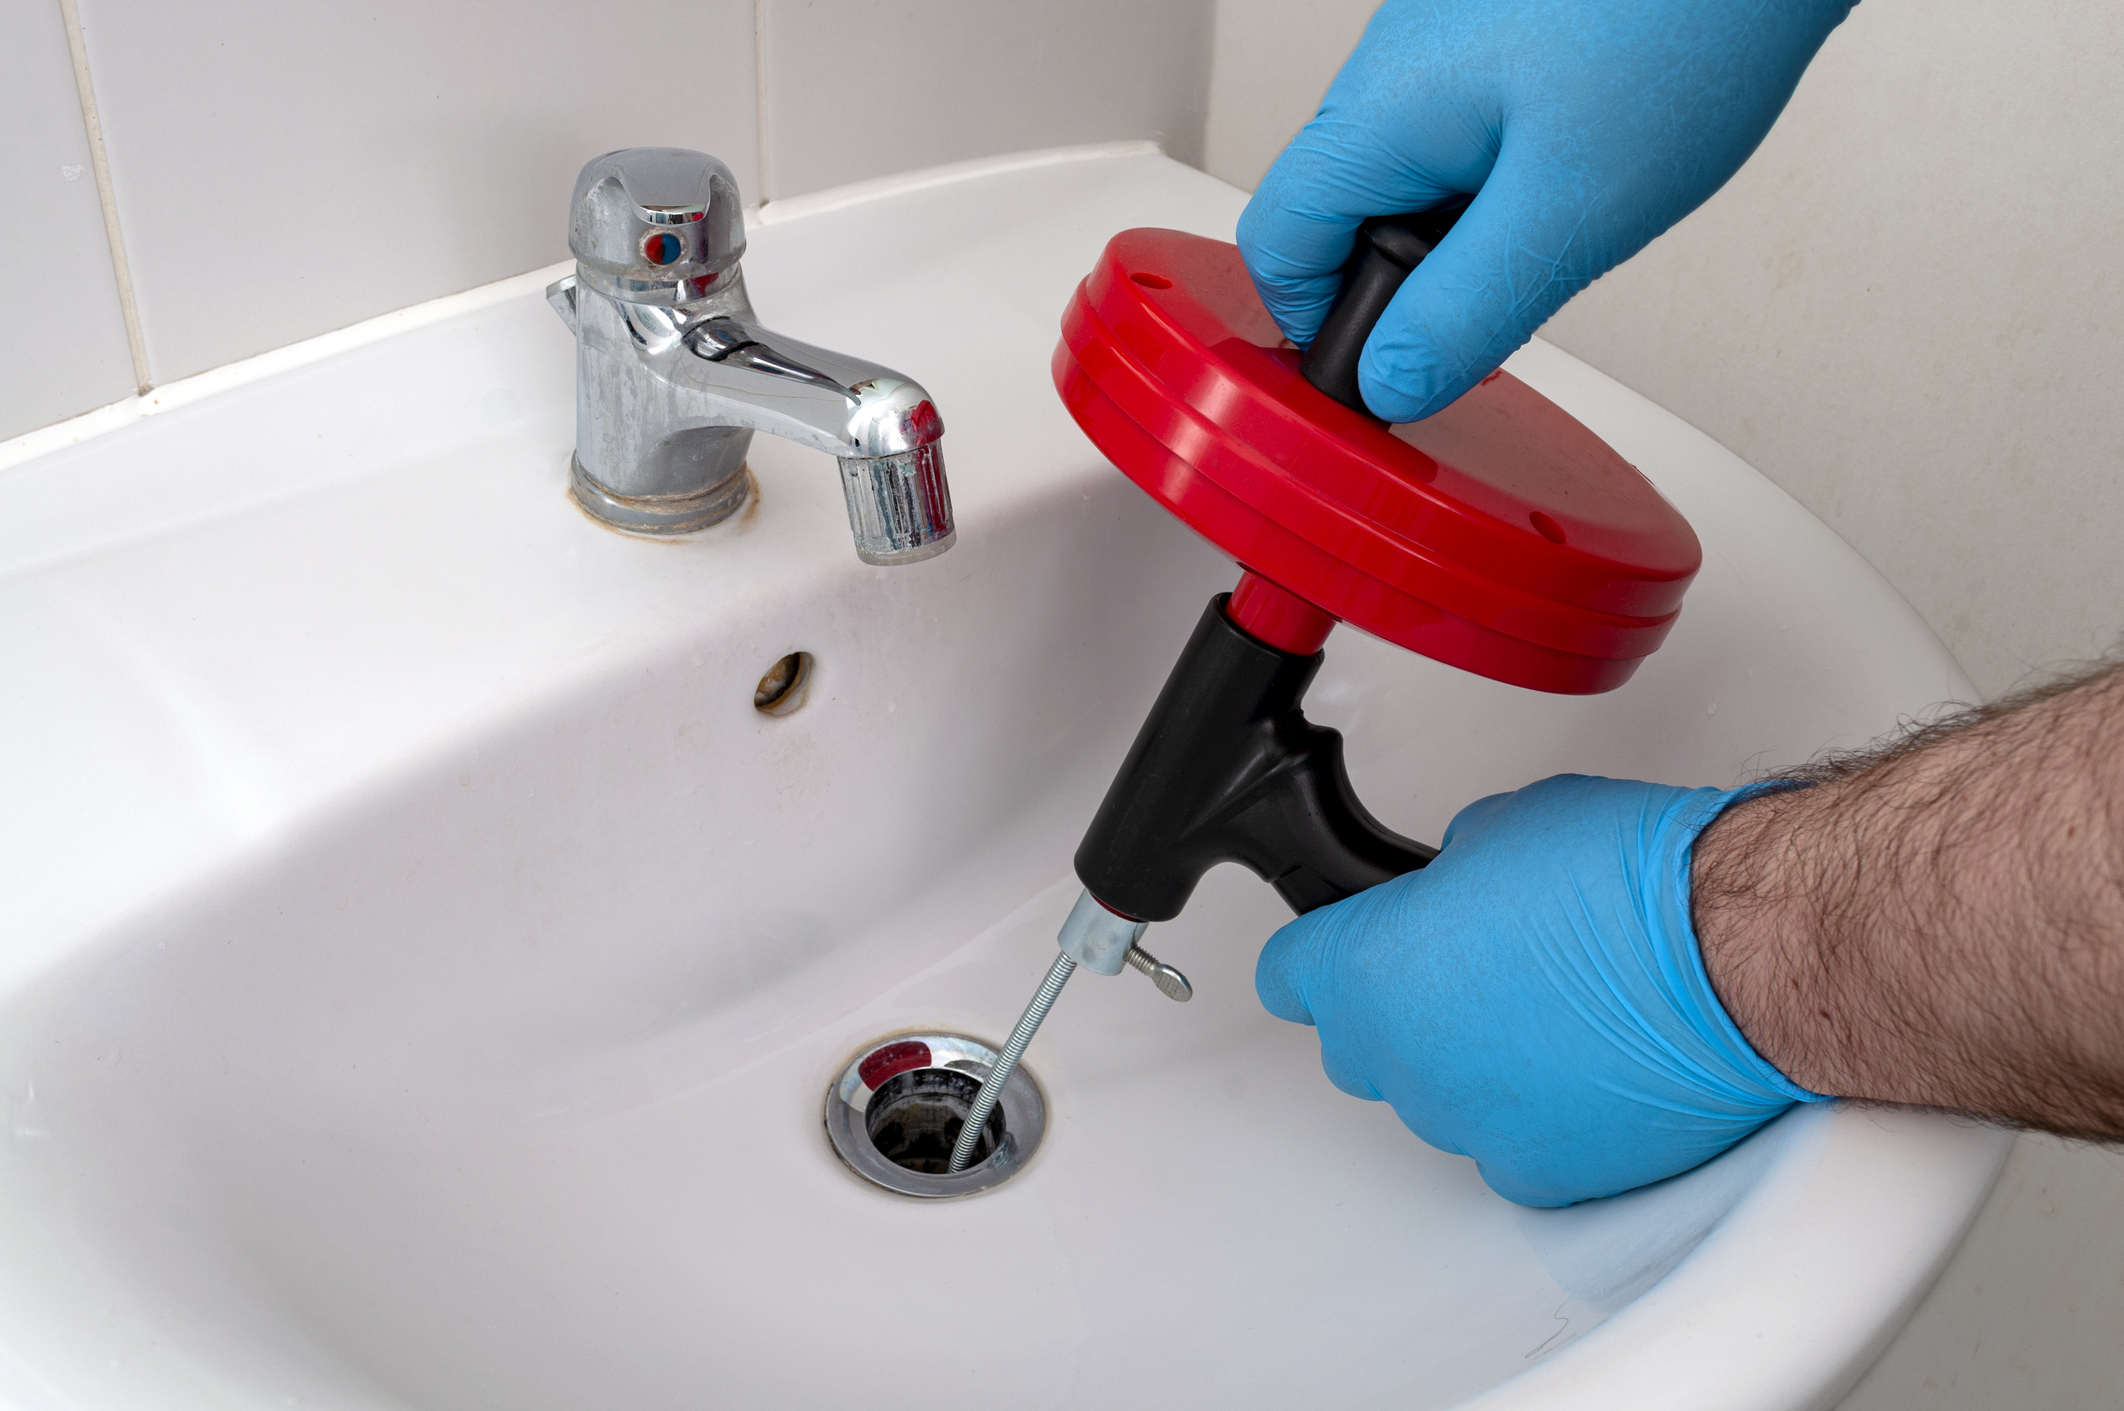 Plumber using drain snake down sink to unclog